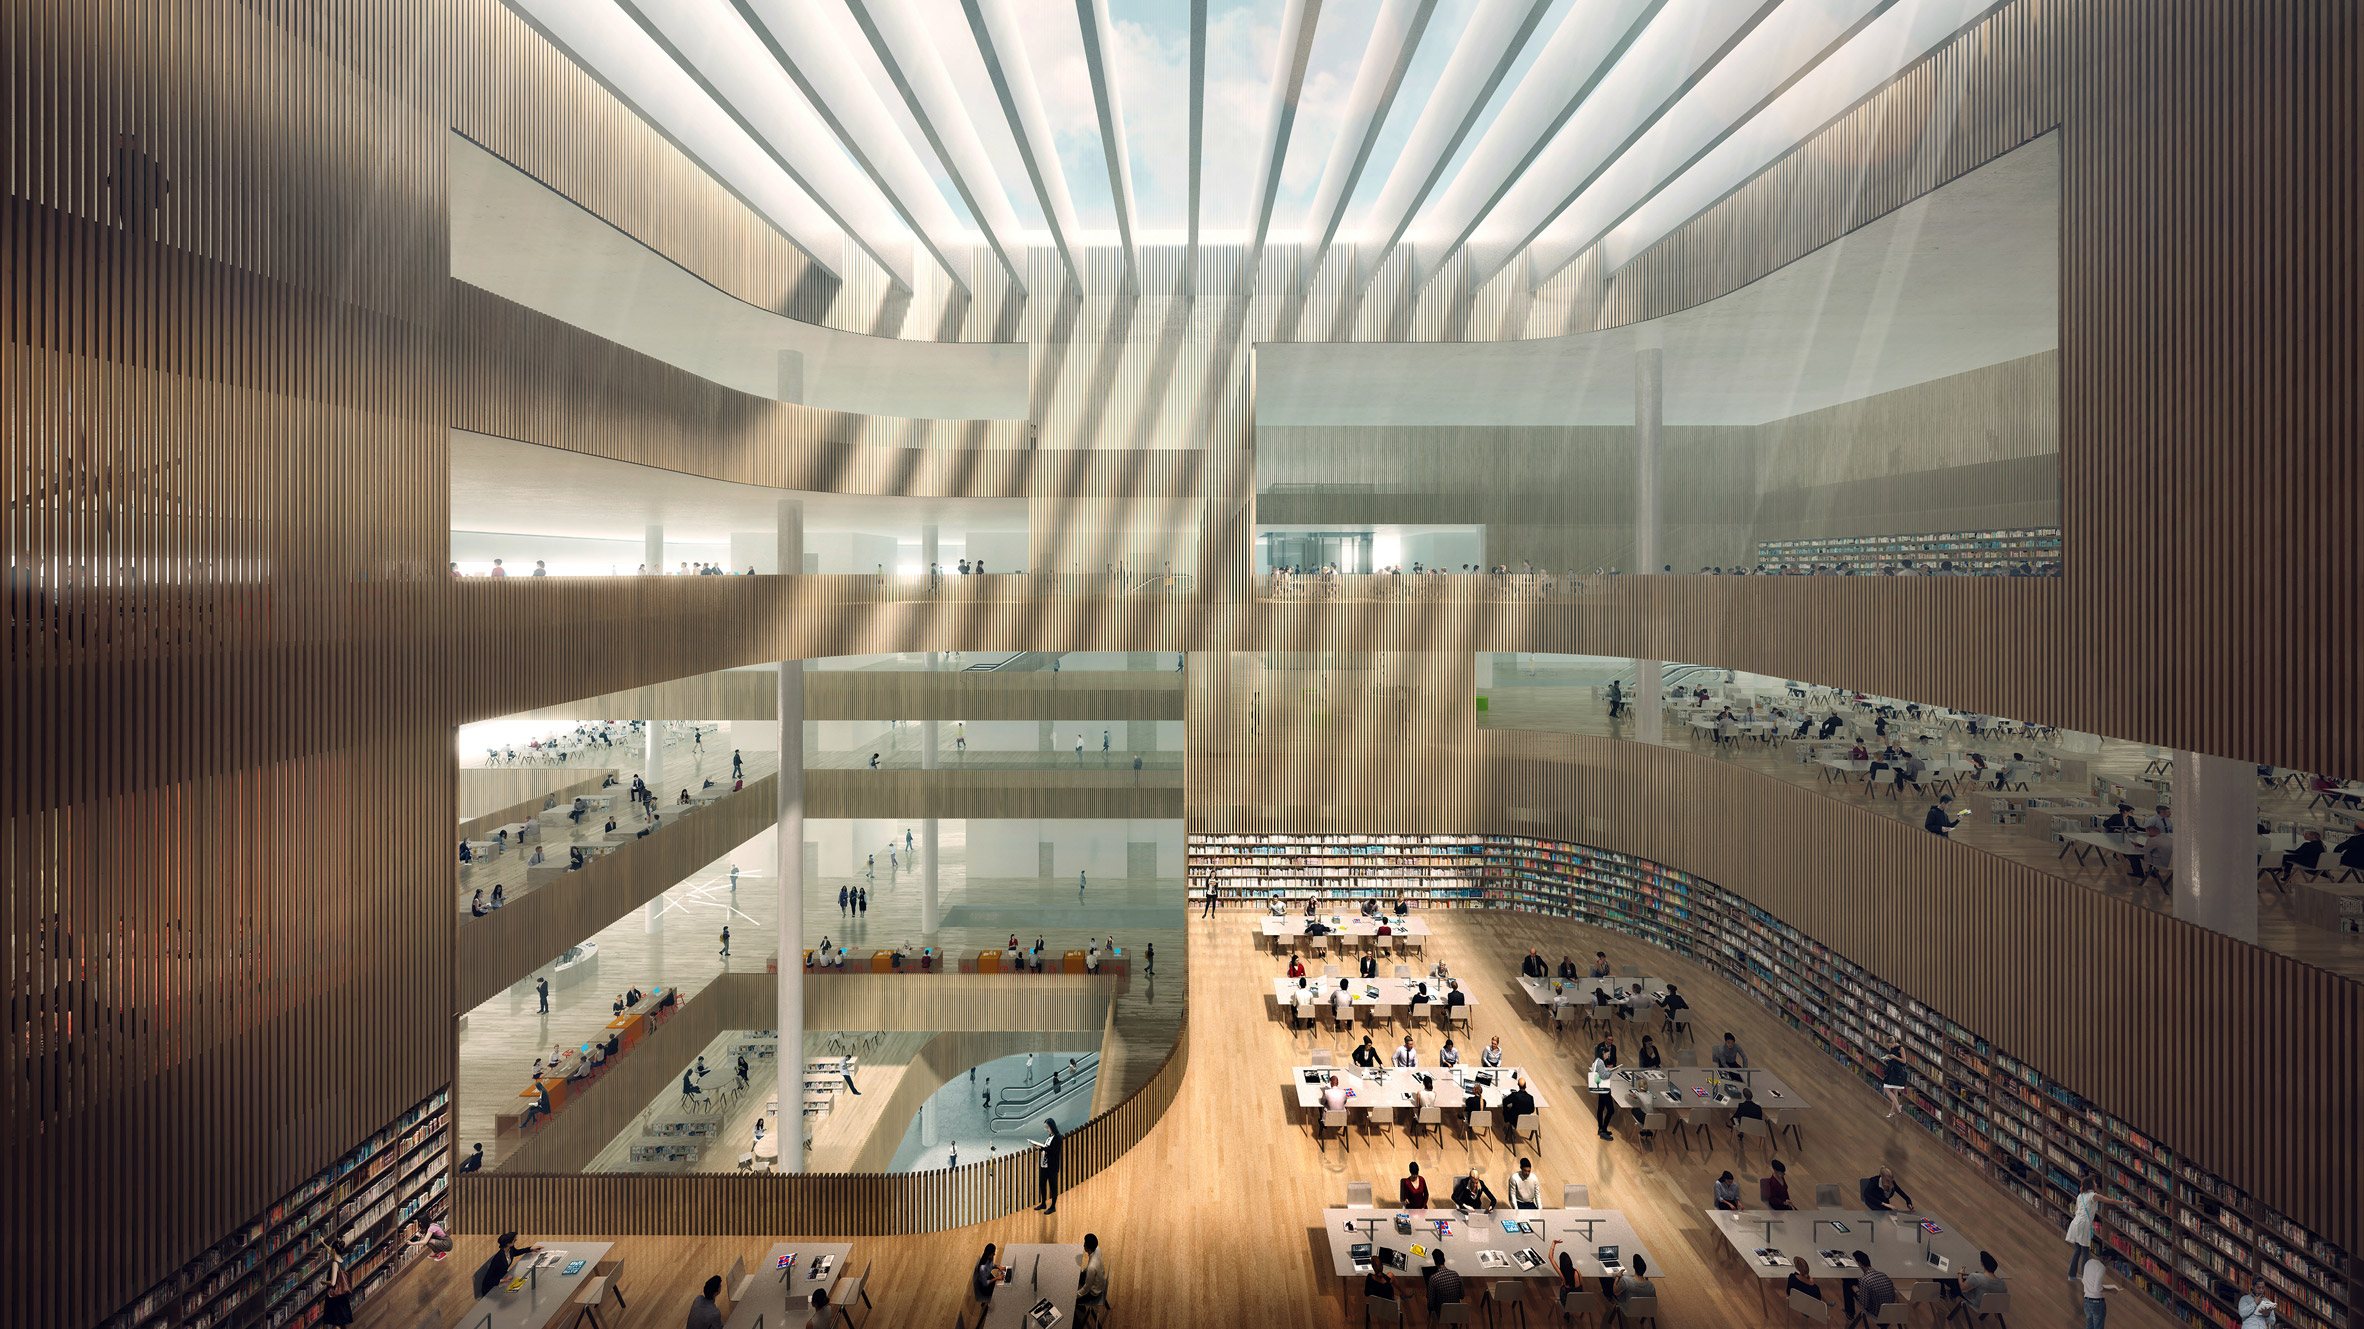 Shanghai Library by Schmidt Hammer Lassen Architects